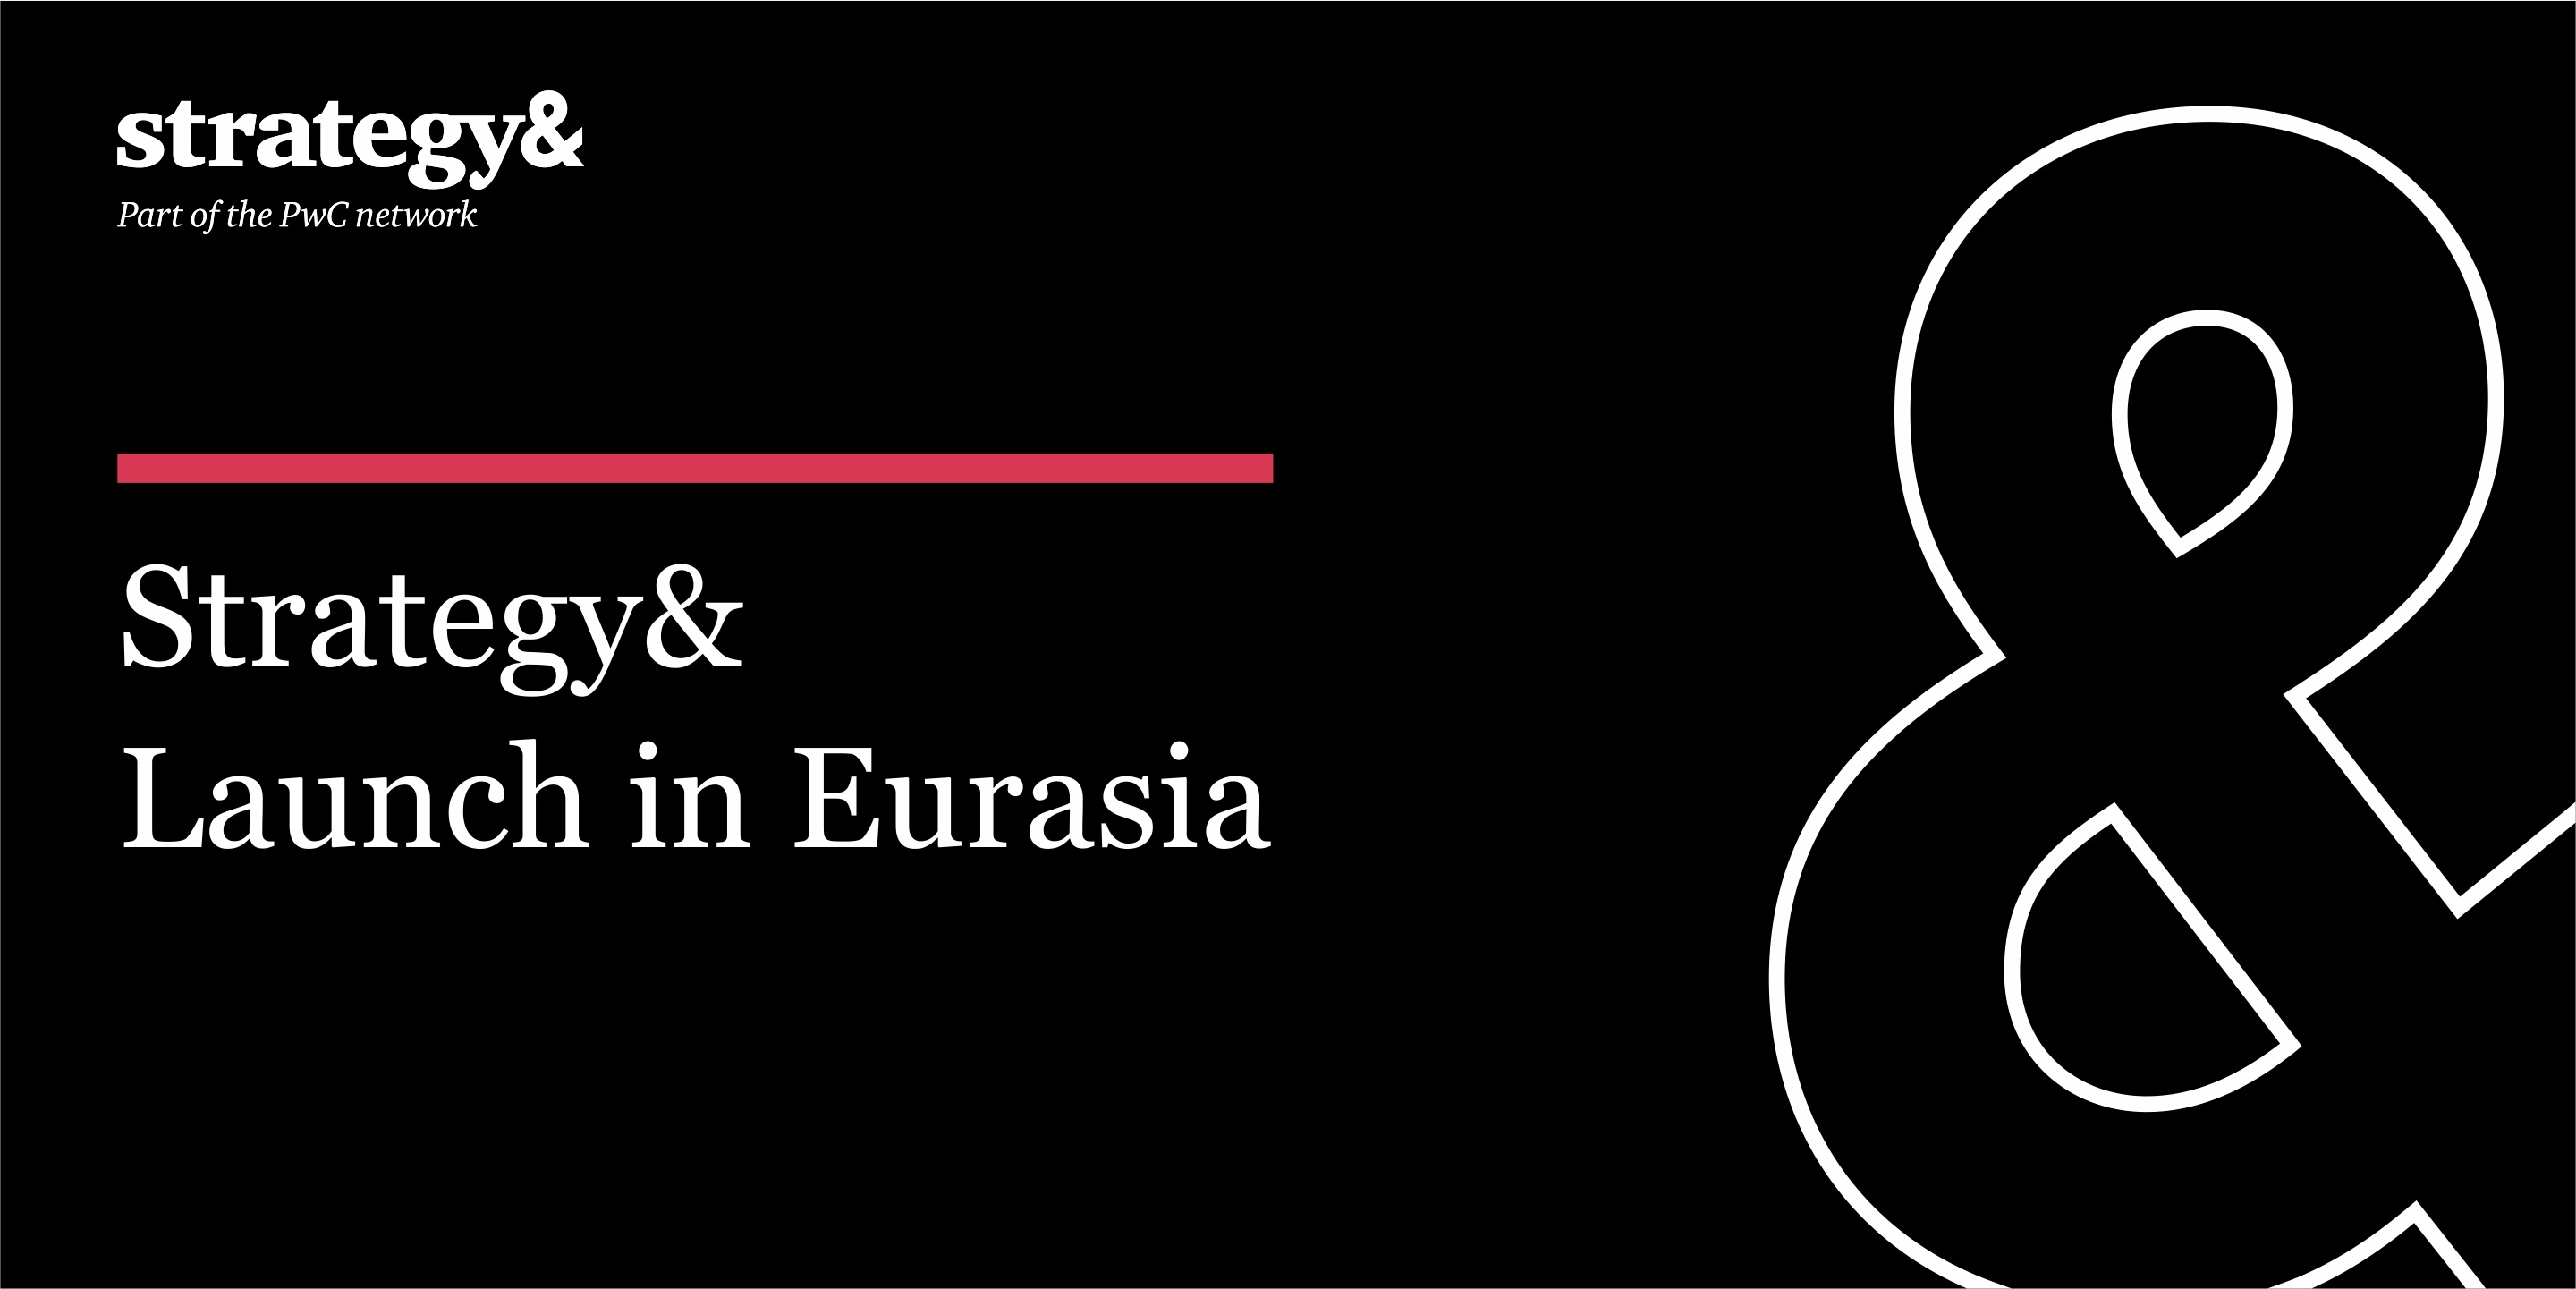 PwC Eurasia Announces Launch of Strategy& in Eurasia, Including Azerbaijan